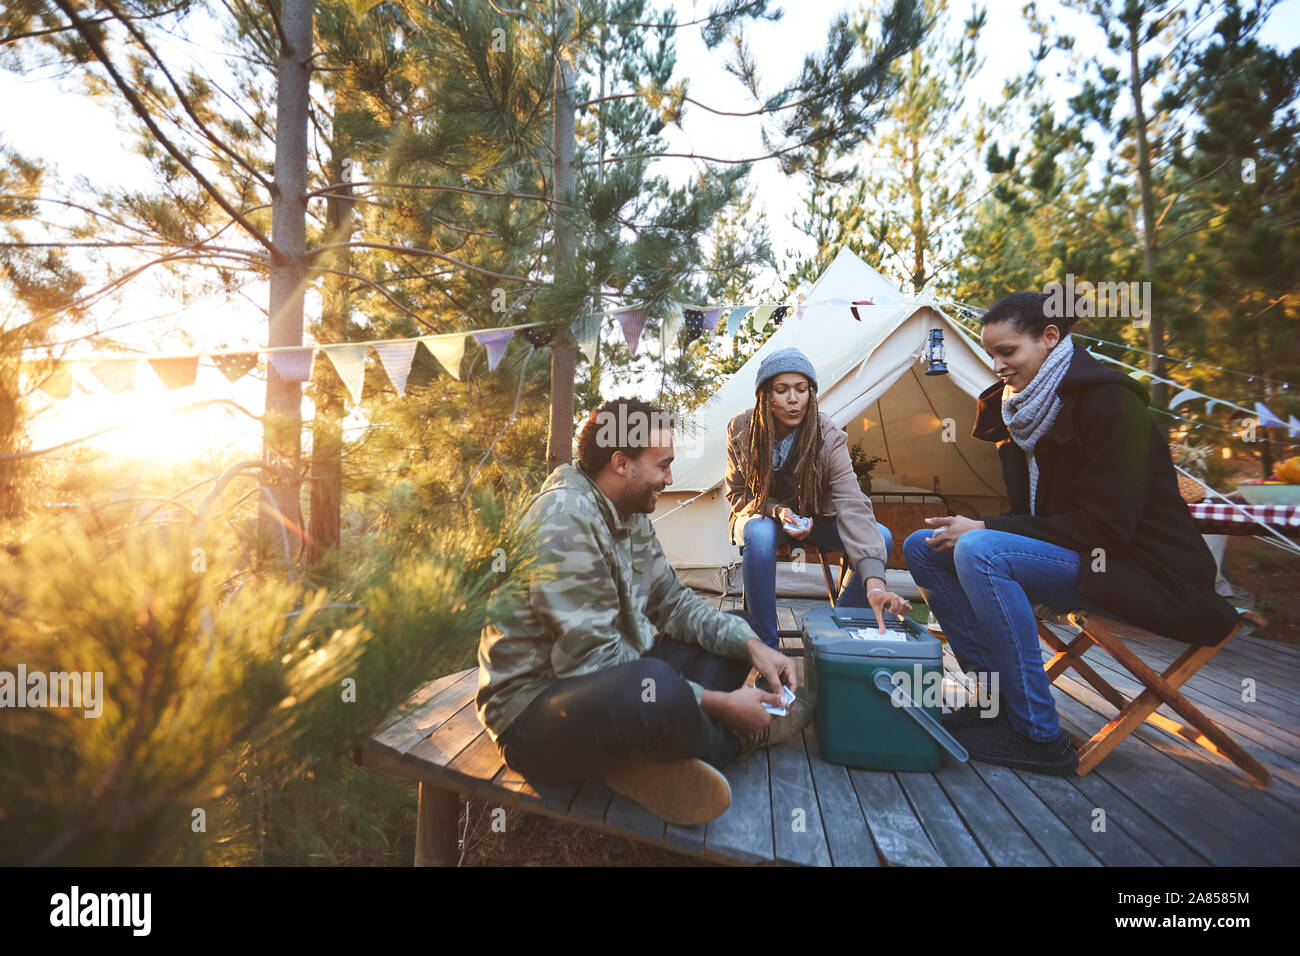 Freunde Karten außerhalb Jurte bei Sunny Campingplatz in Holz Stockfoto